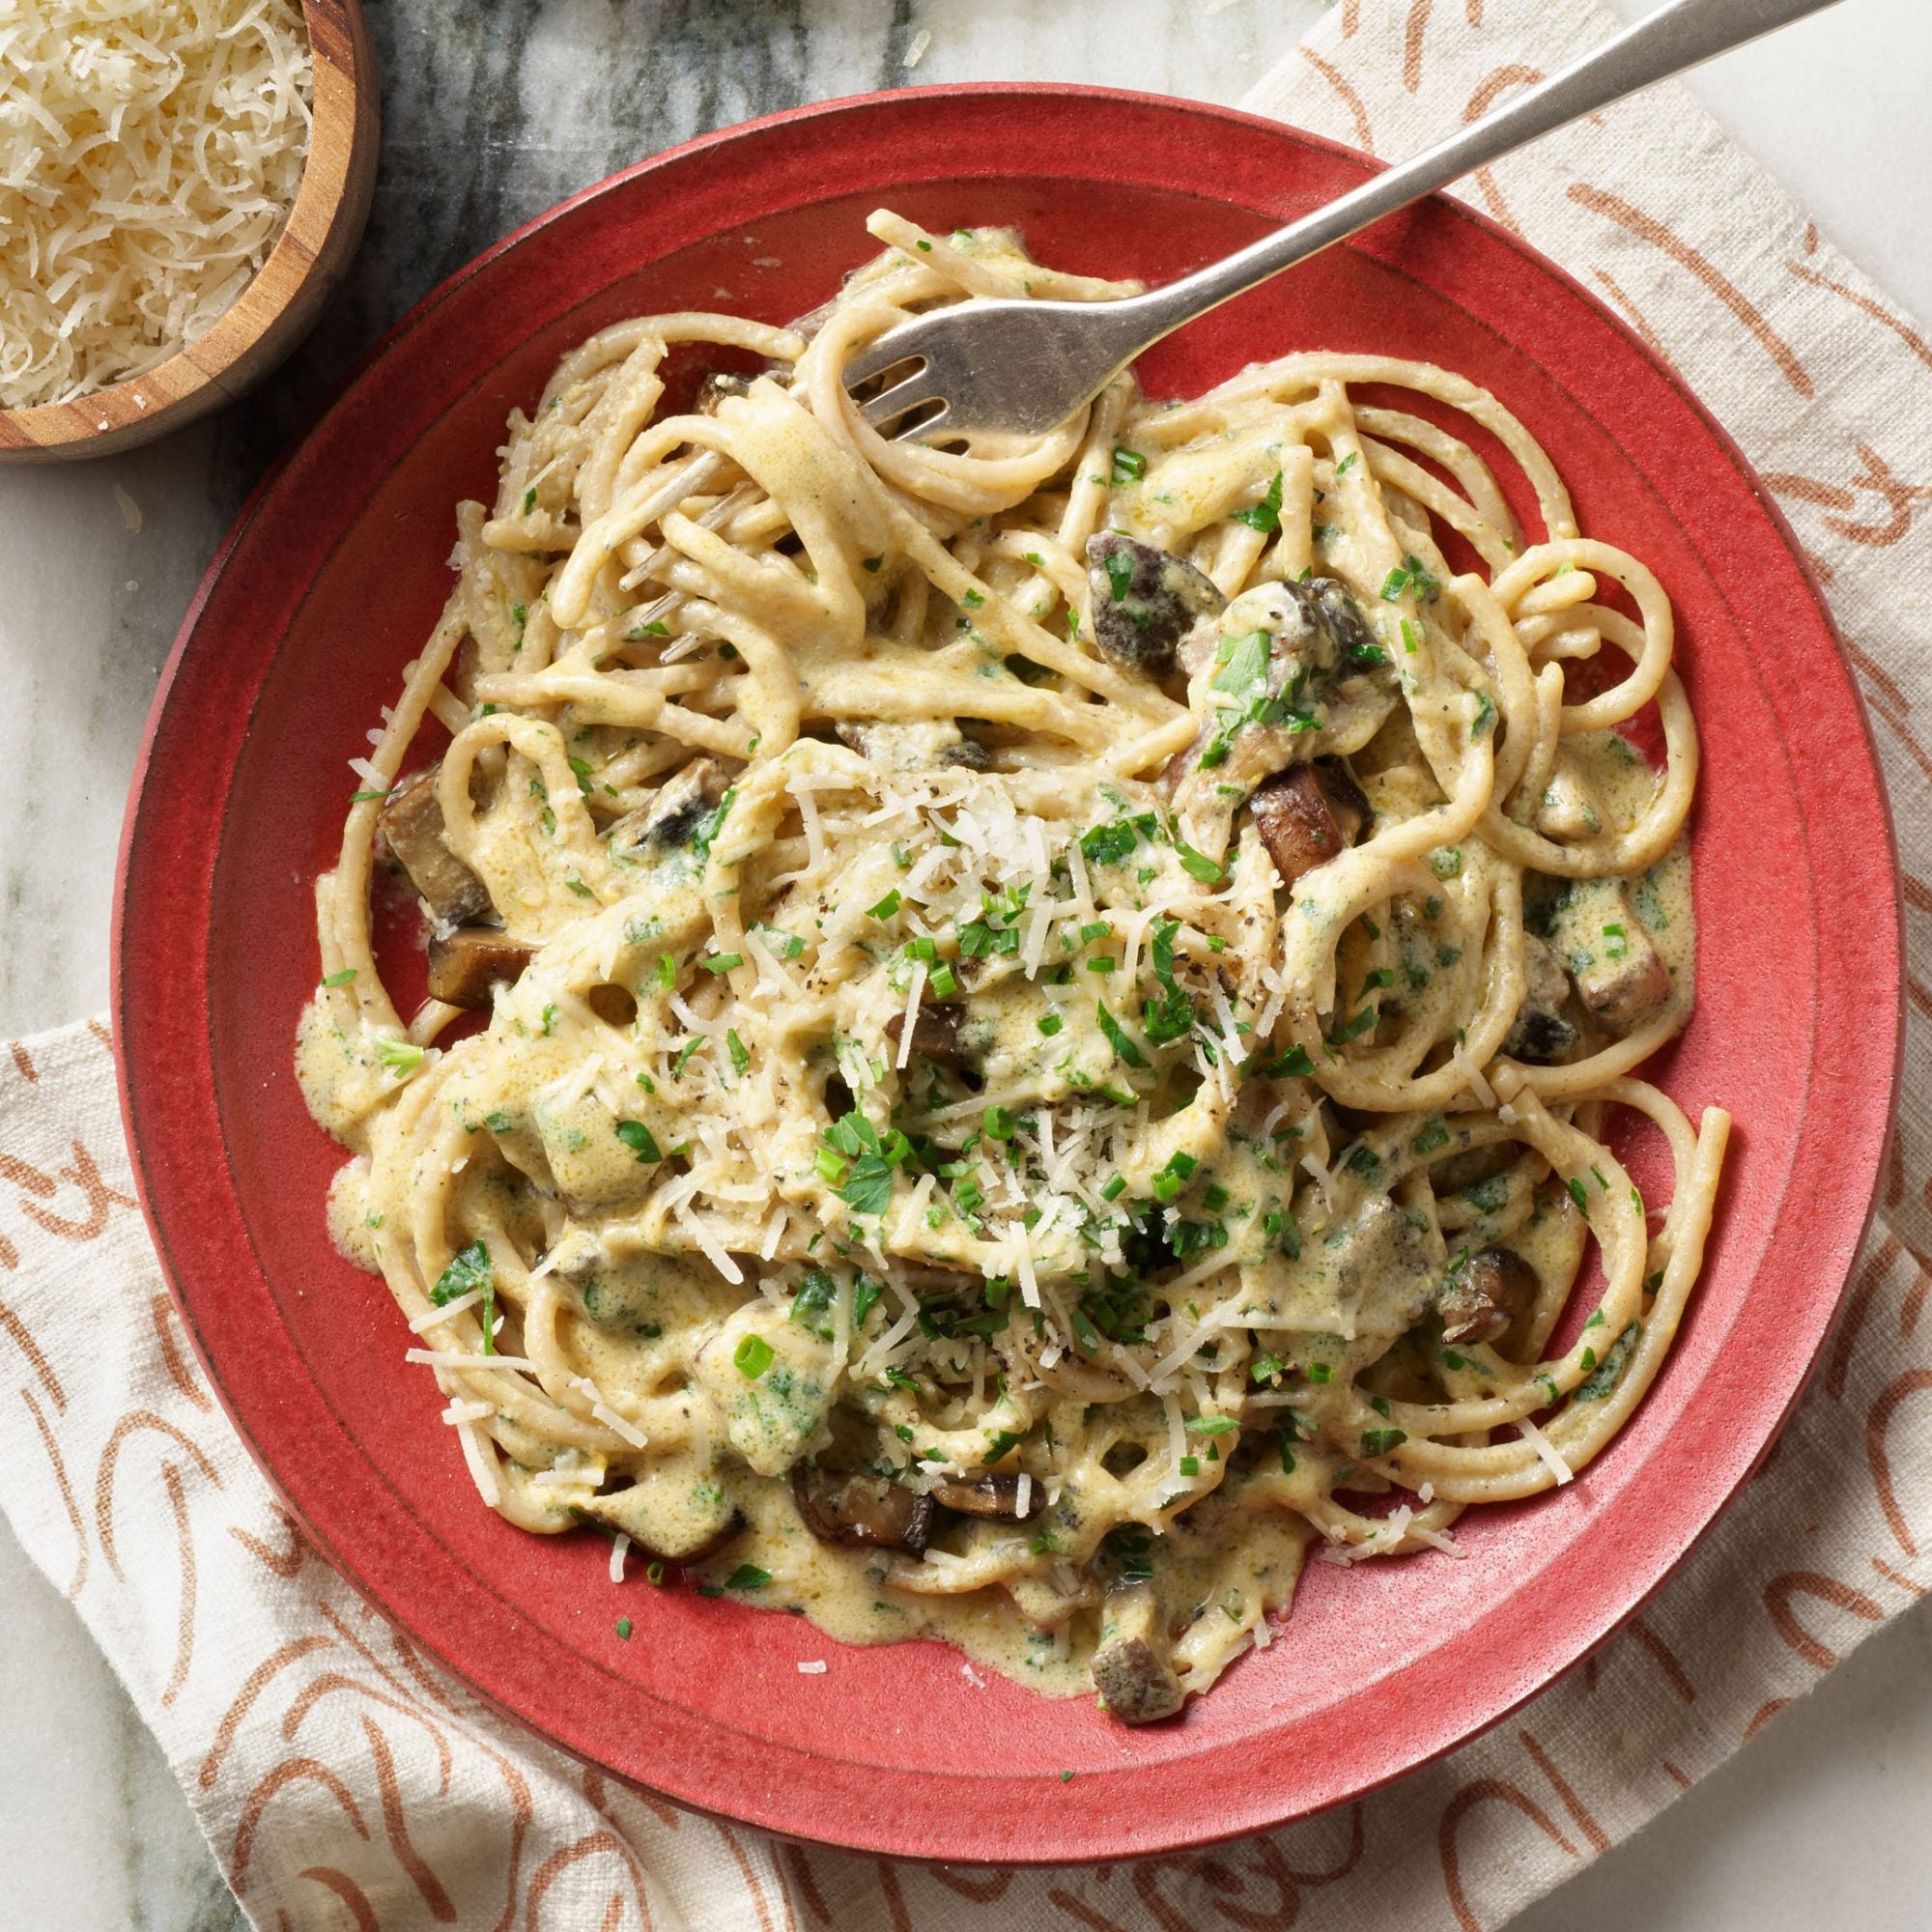 Rachael Ray's Spaghetti Carbonara with Mushrooms